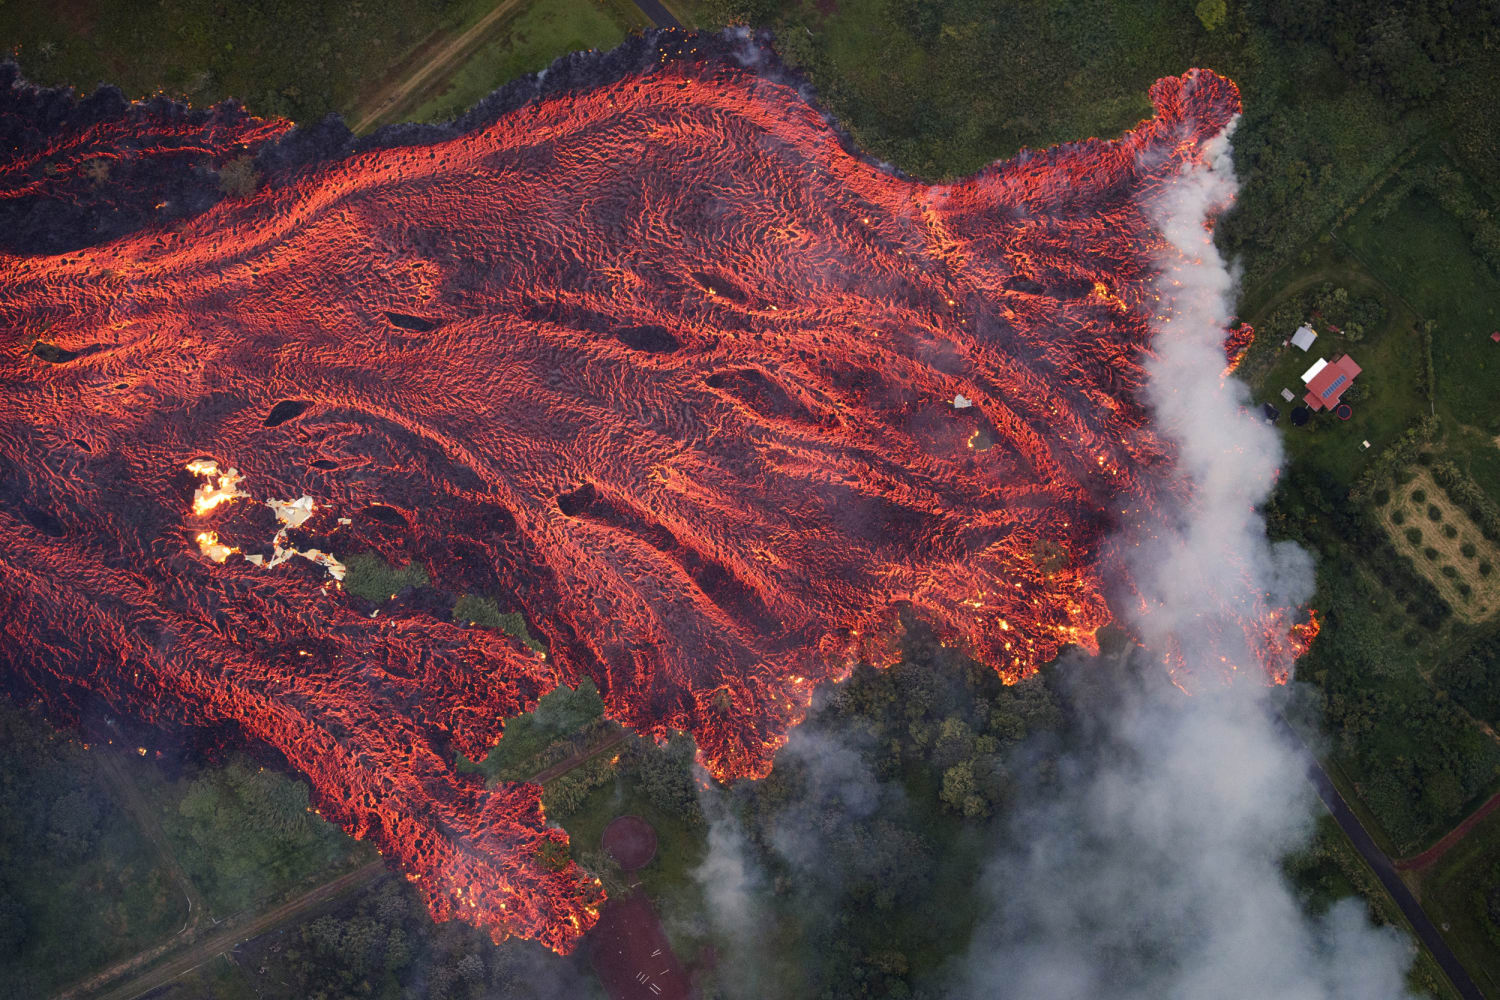 III. Historical Background of Kilauea Volcano Eruptions